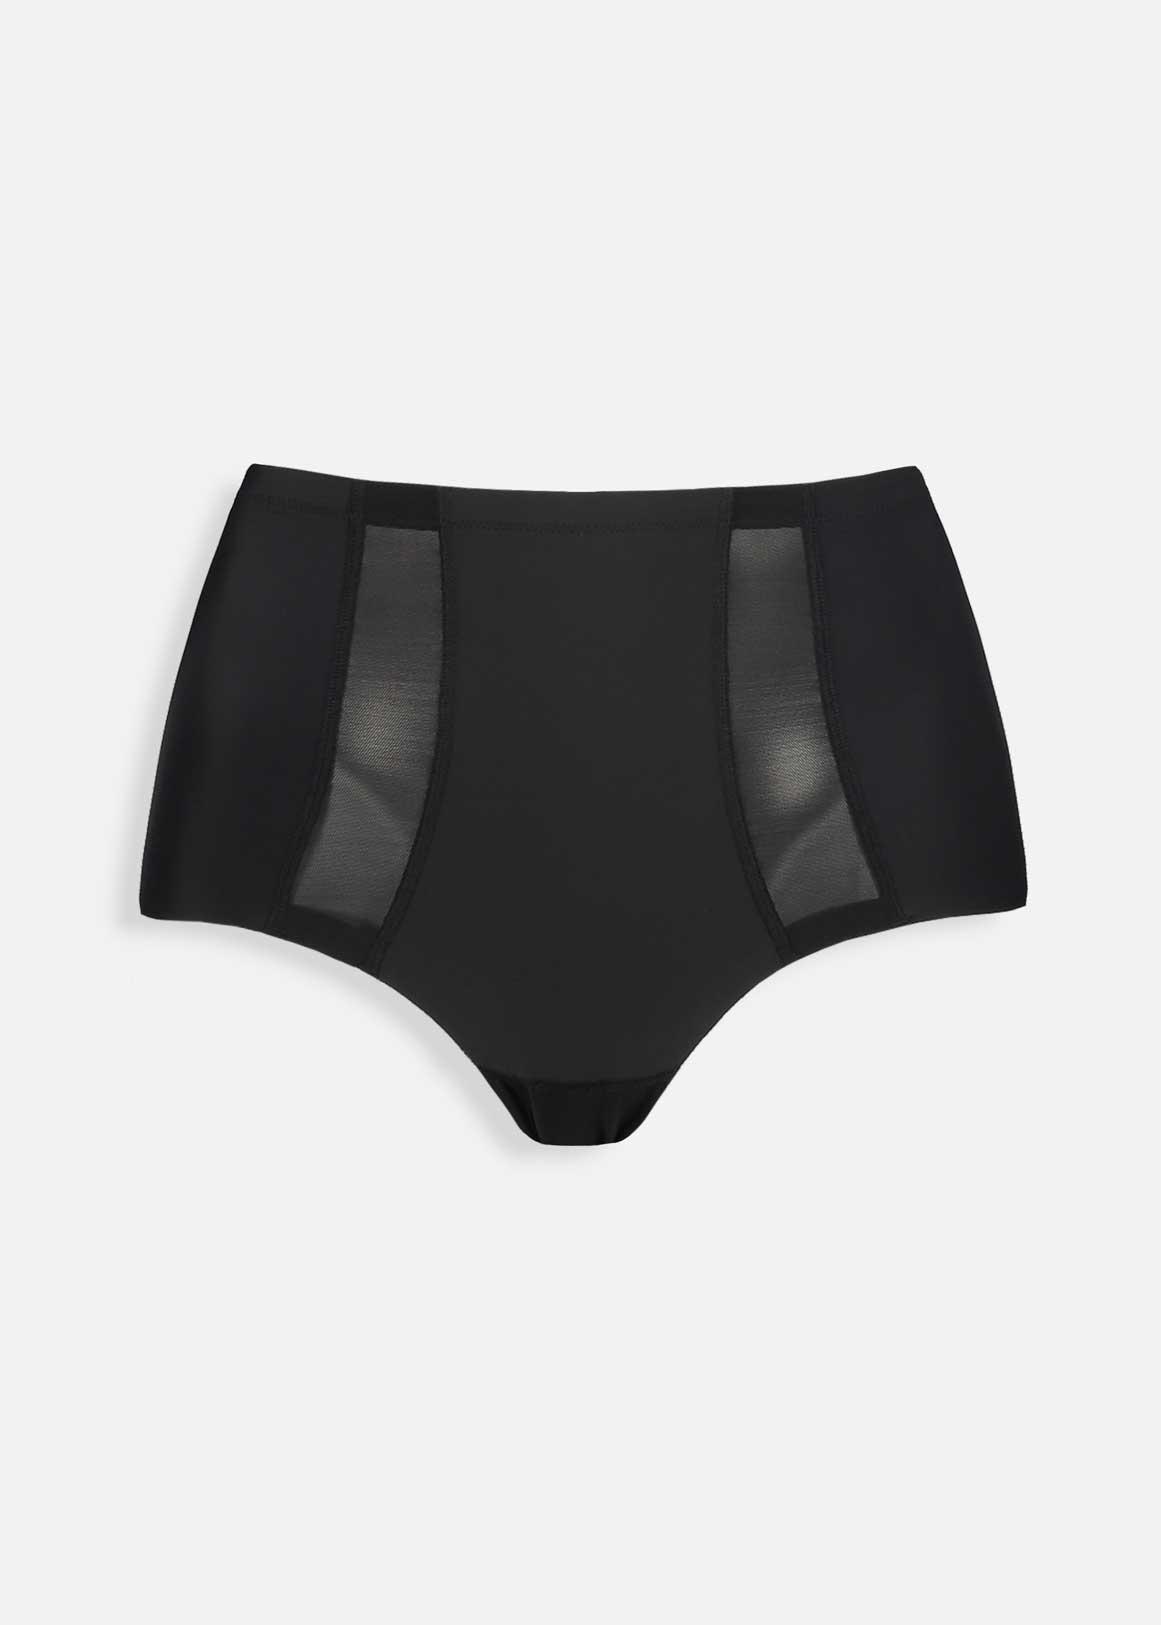 Lashevan All Mesh Underwear Prism Charcoal 100 (L) price in